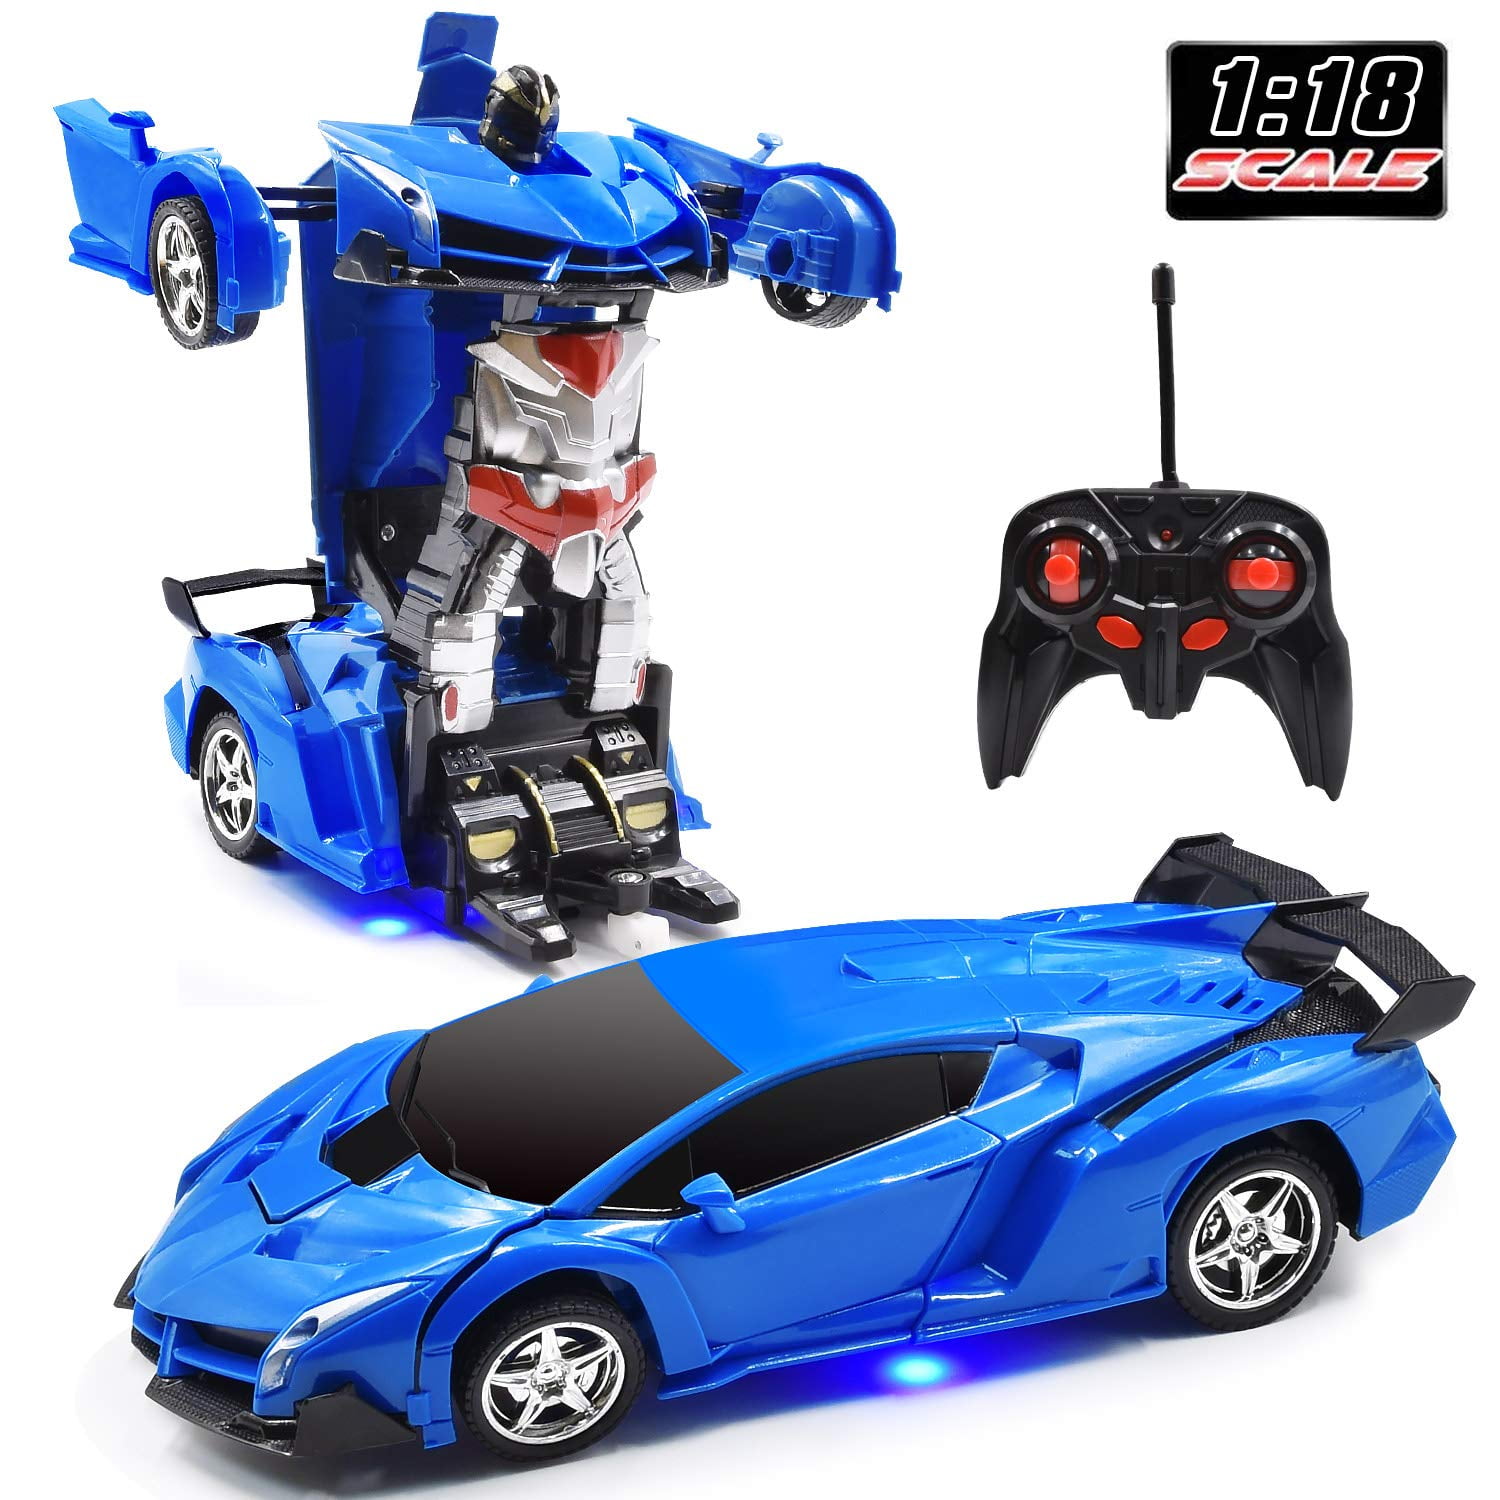 Trimnpy RC Cars for Kids Remote Control Transformrobot Toys, One 